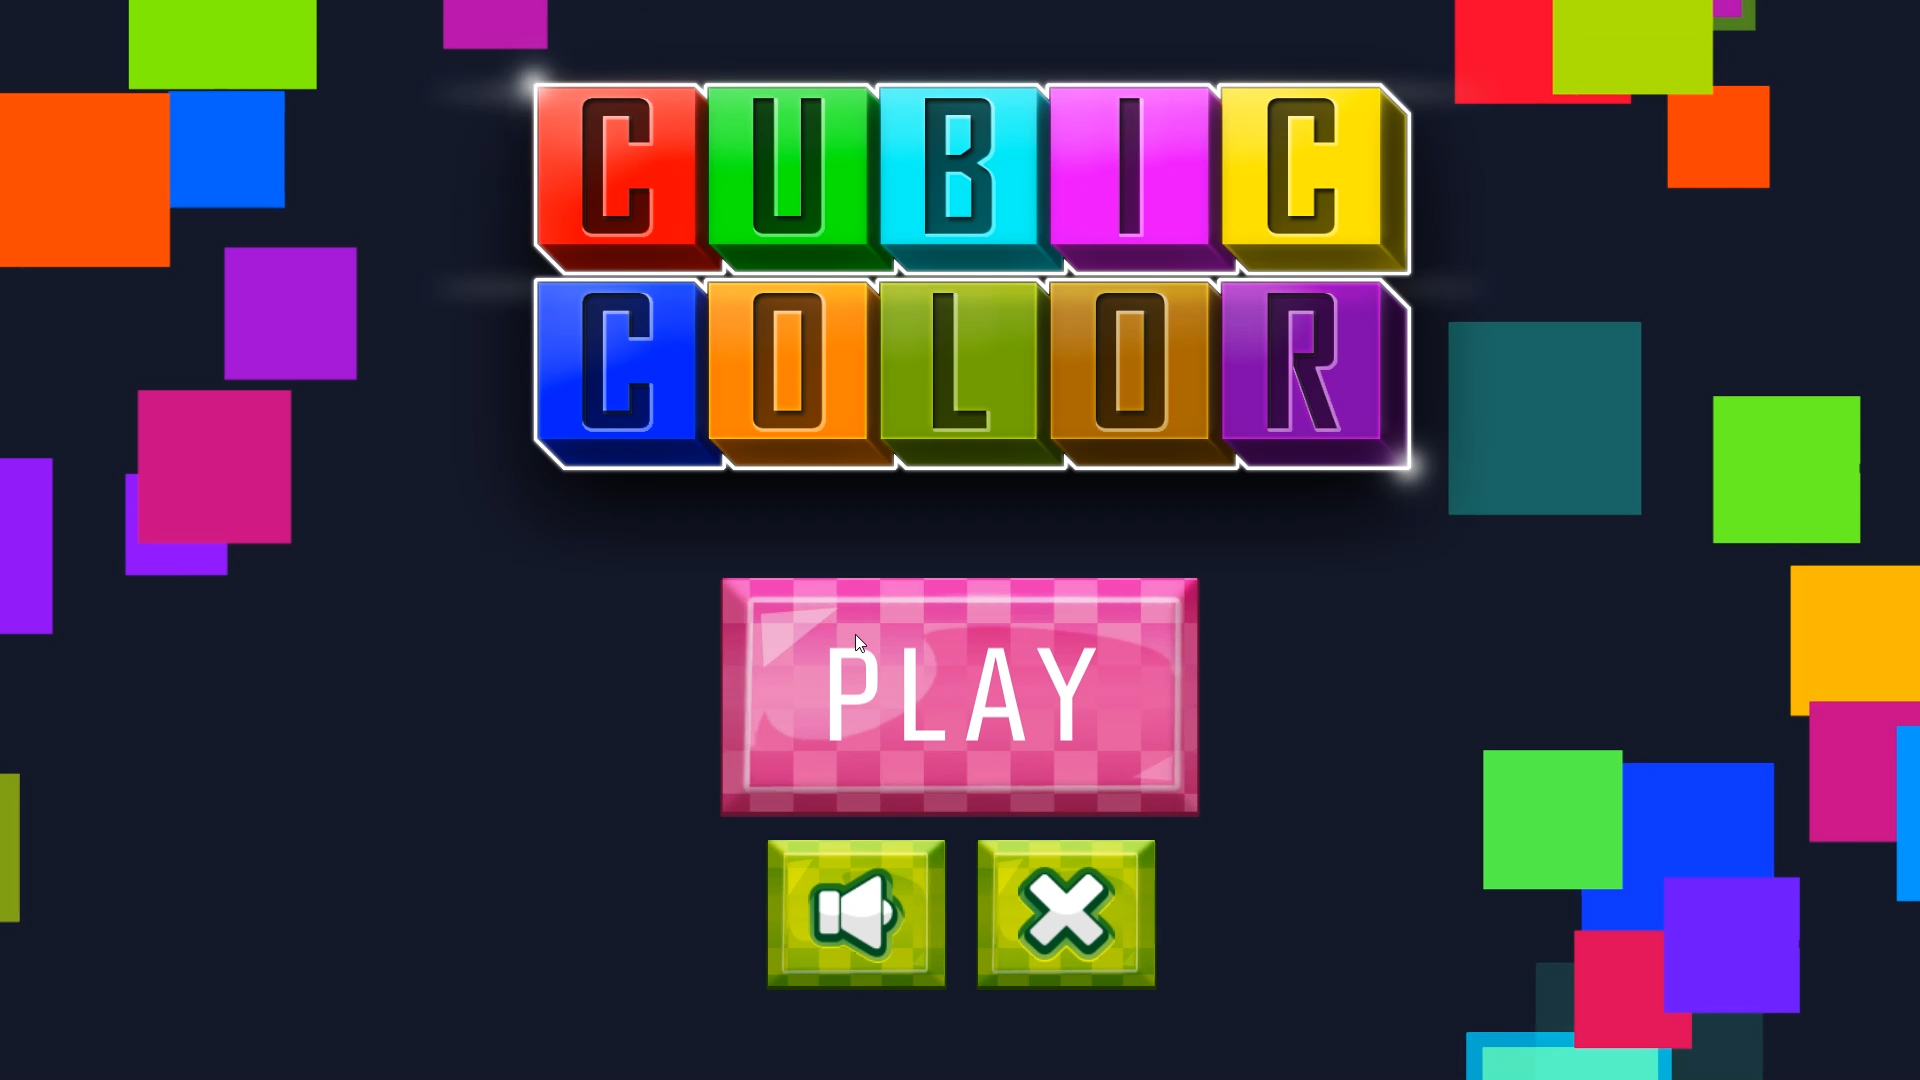 Cubic games